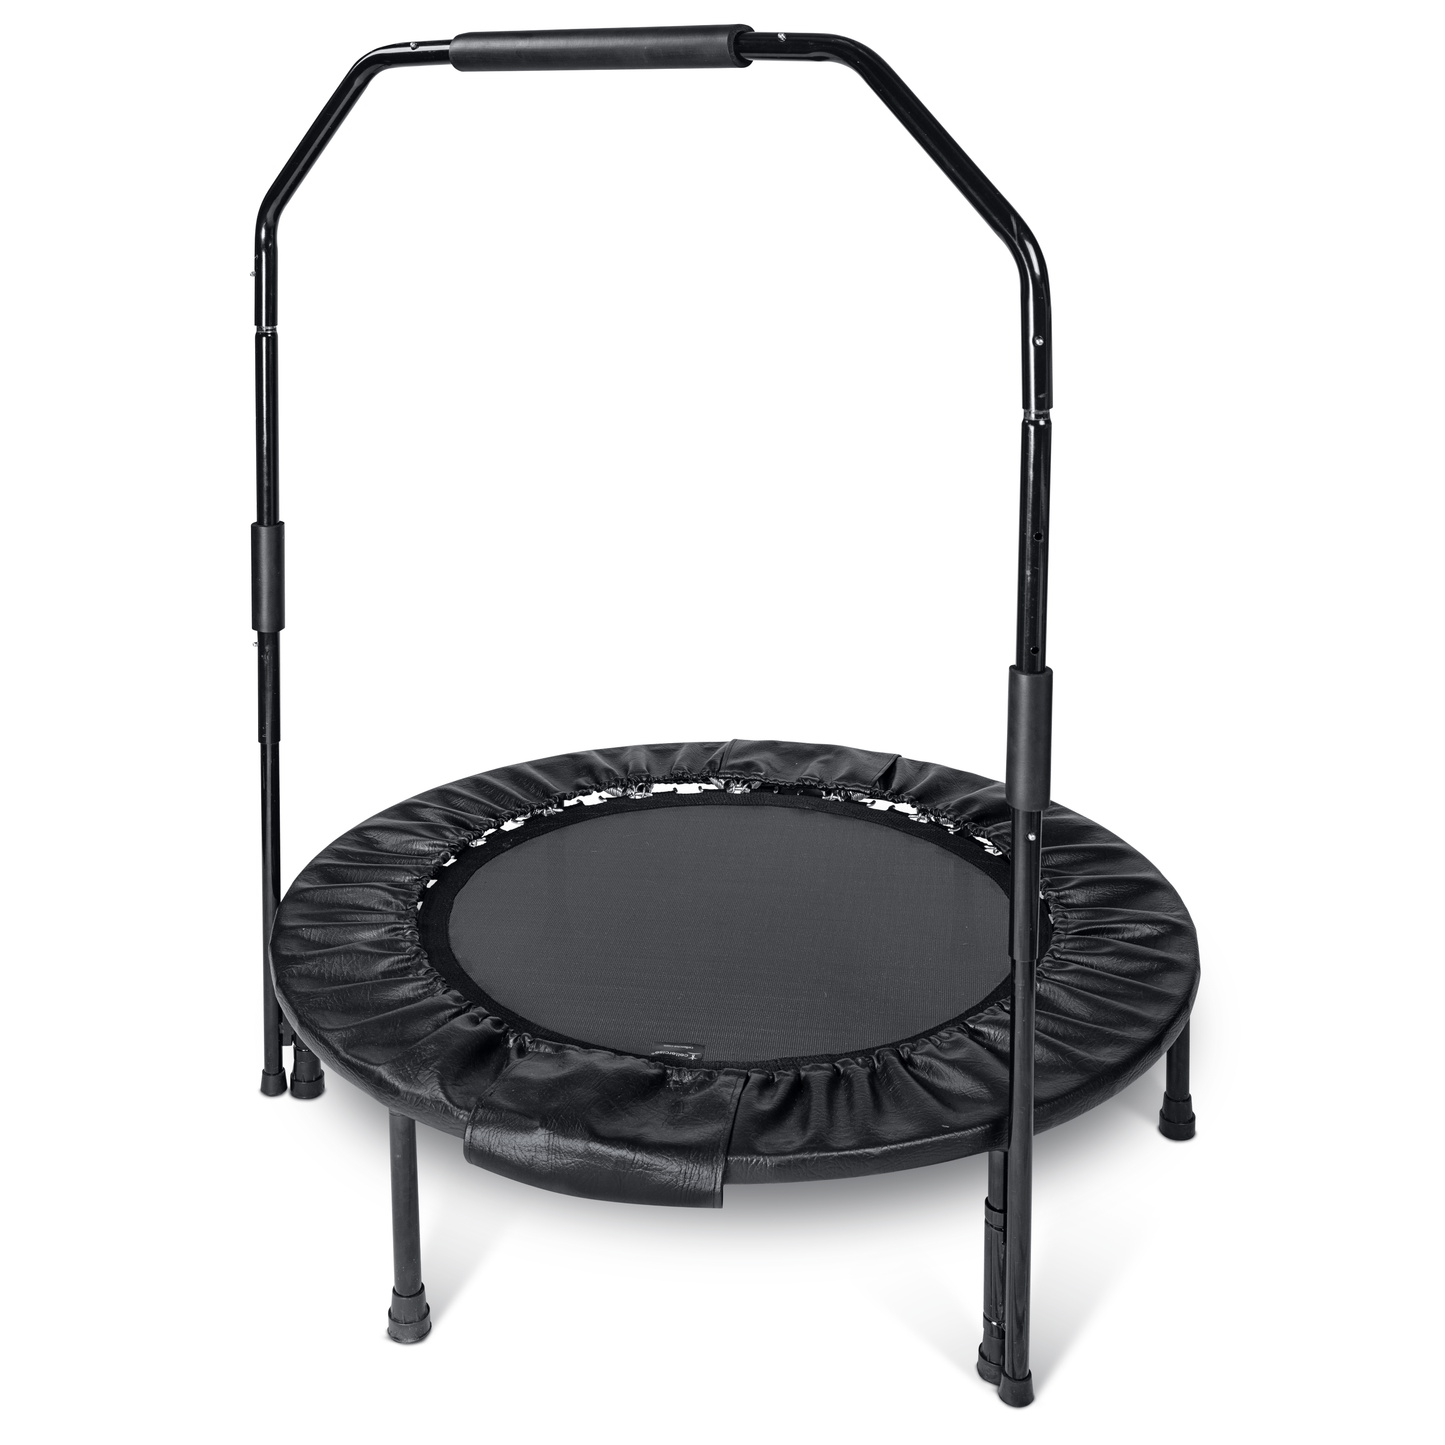 cellerciser rebounder mini trampoline half fold home gym with professional balance bar